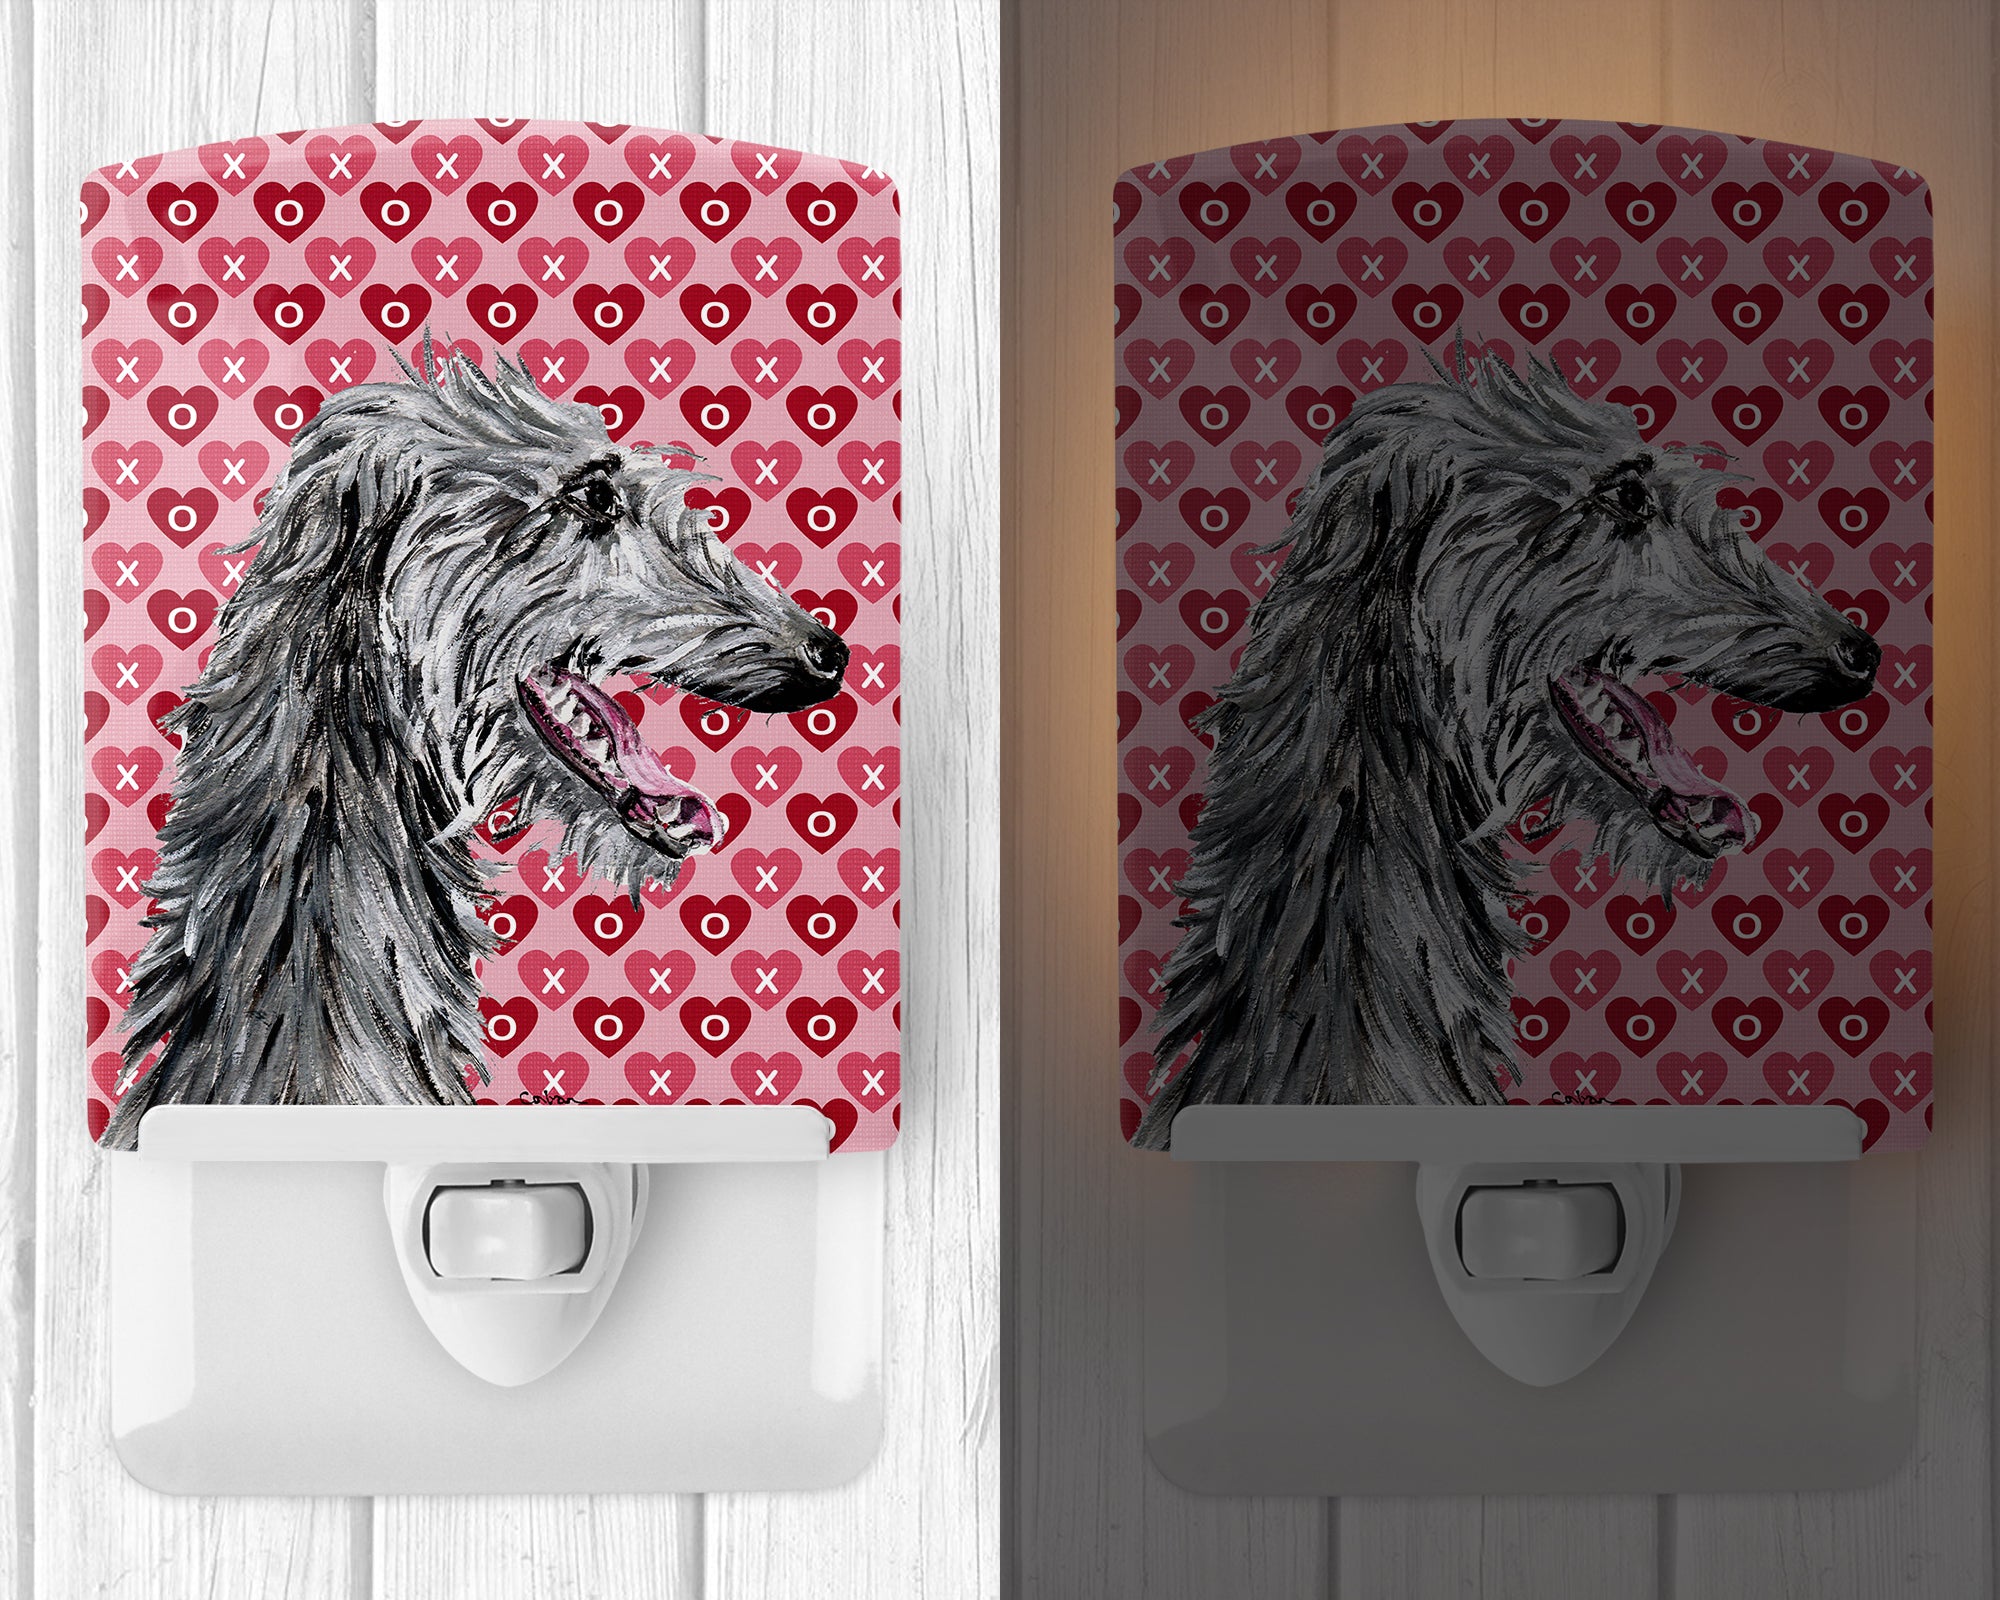 Scottish Deerhound Hearts and Love Ceramic Night Light SC9717CNL - the-store.com